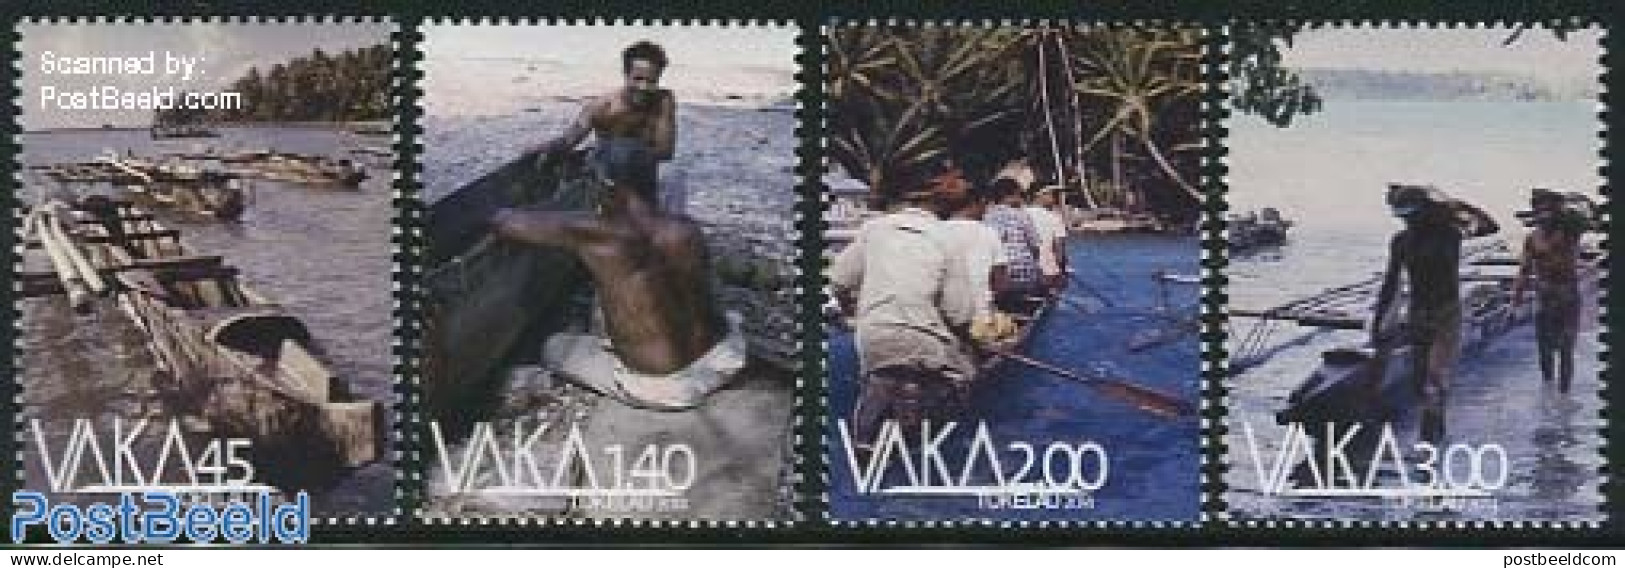 Tokelau Islands 2014 Vaka 4v, Mint NH, Transport - Ships And Boats - Ships